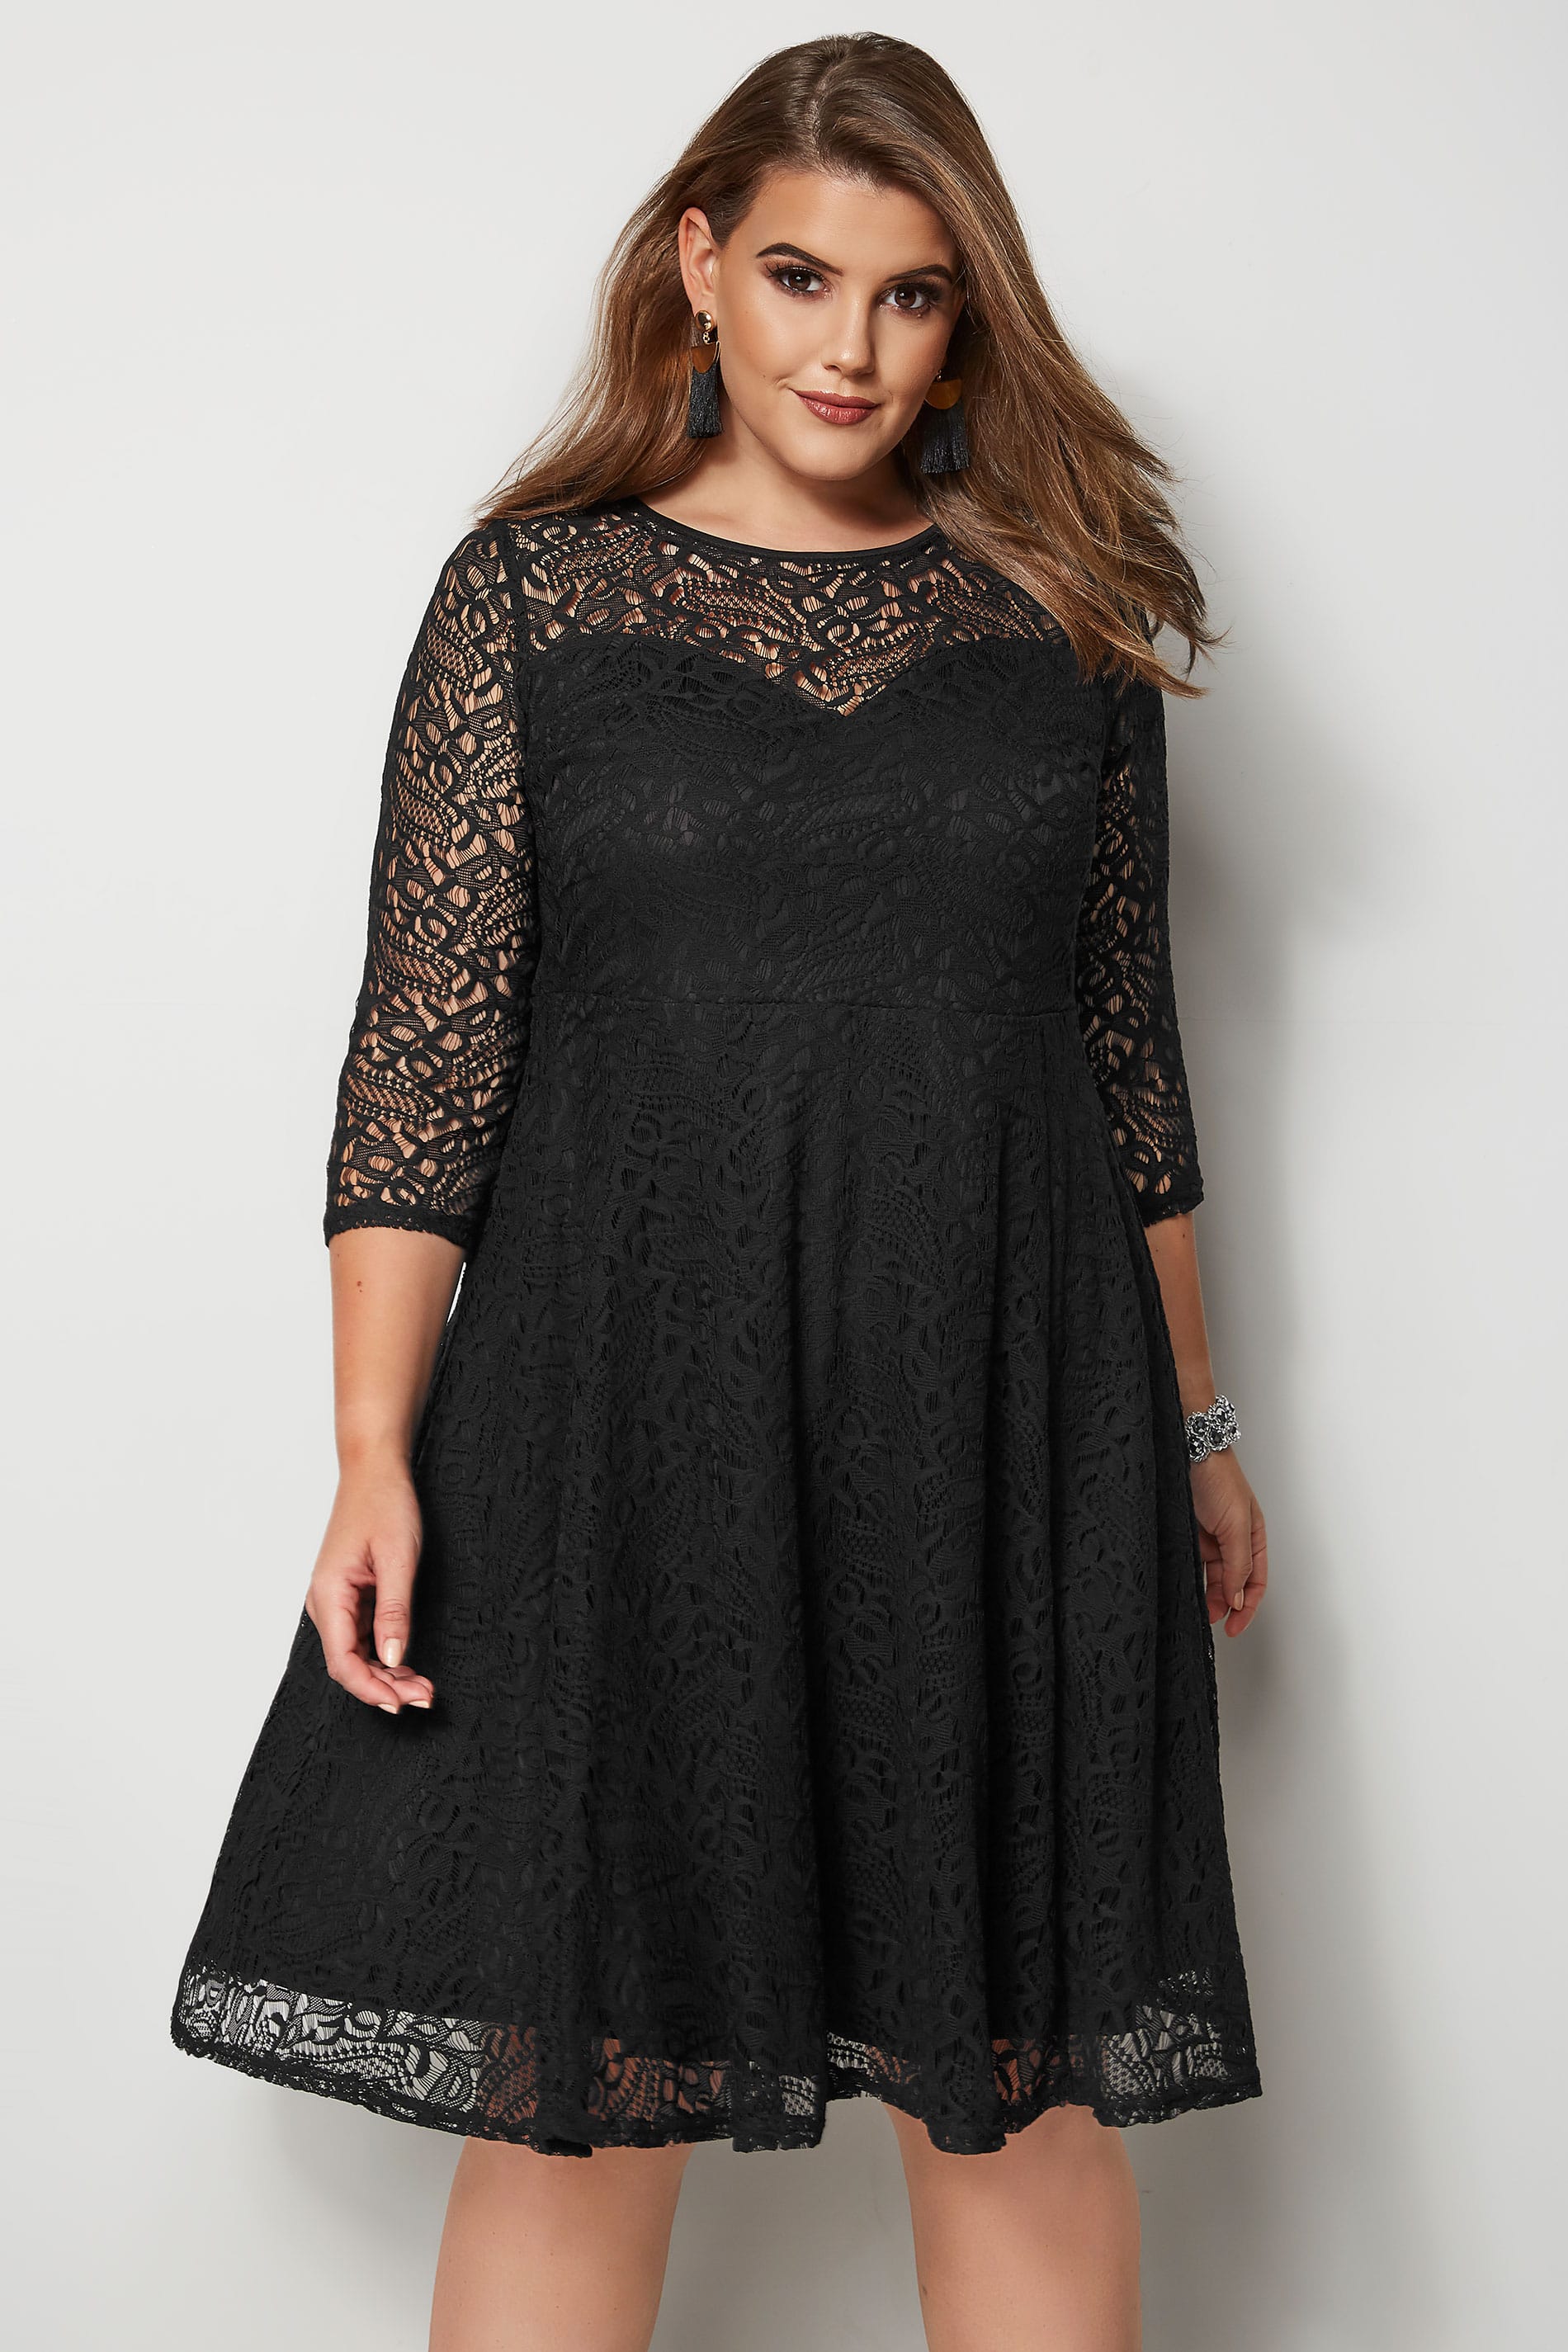 Black Lace Skater Dress, plus size 16 to 36